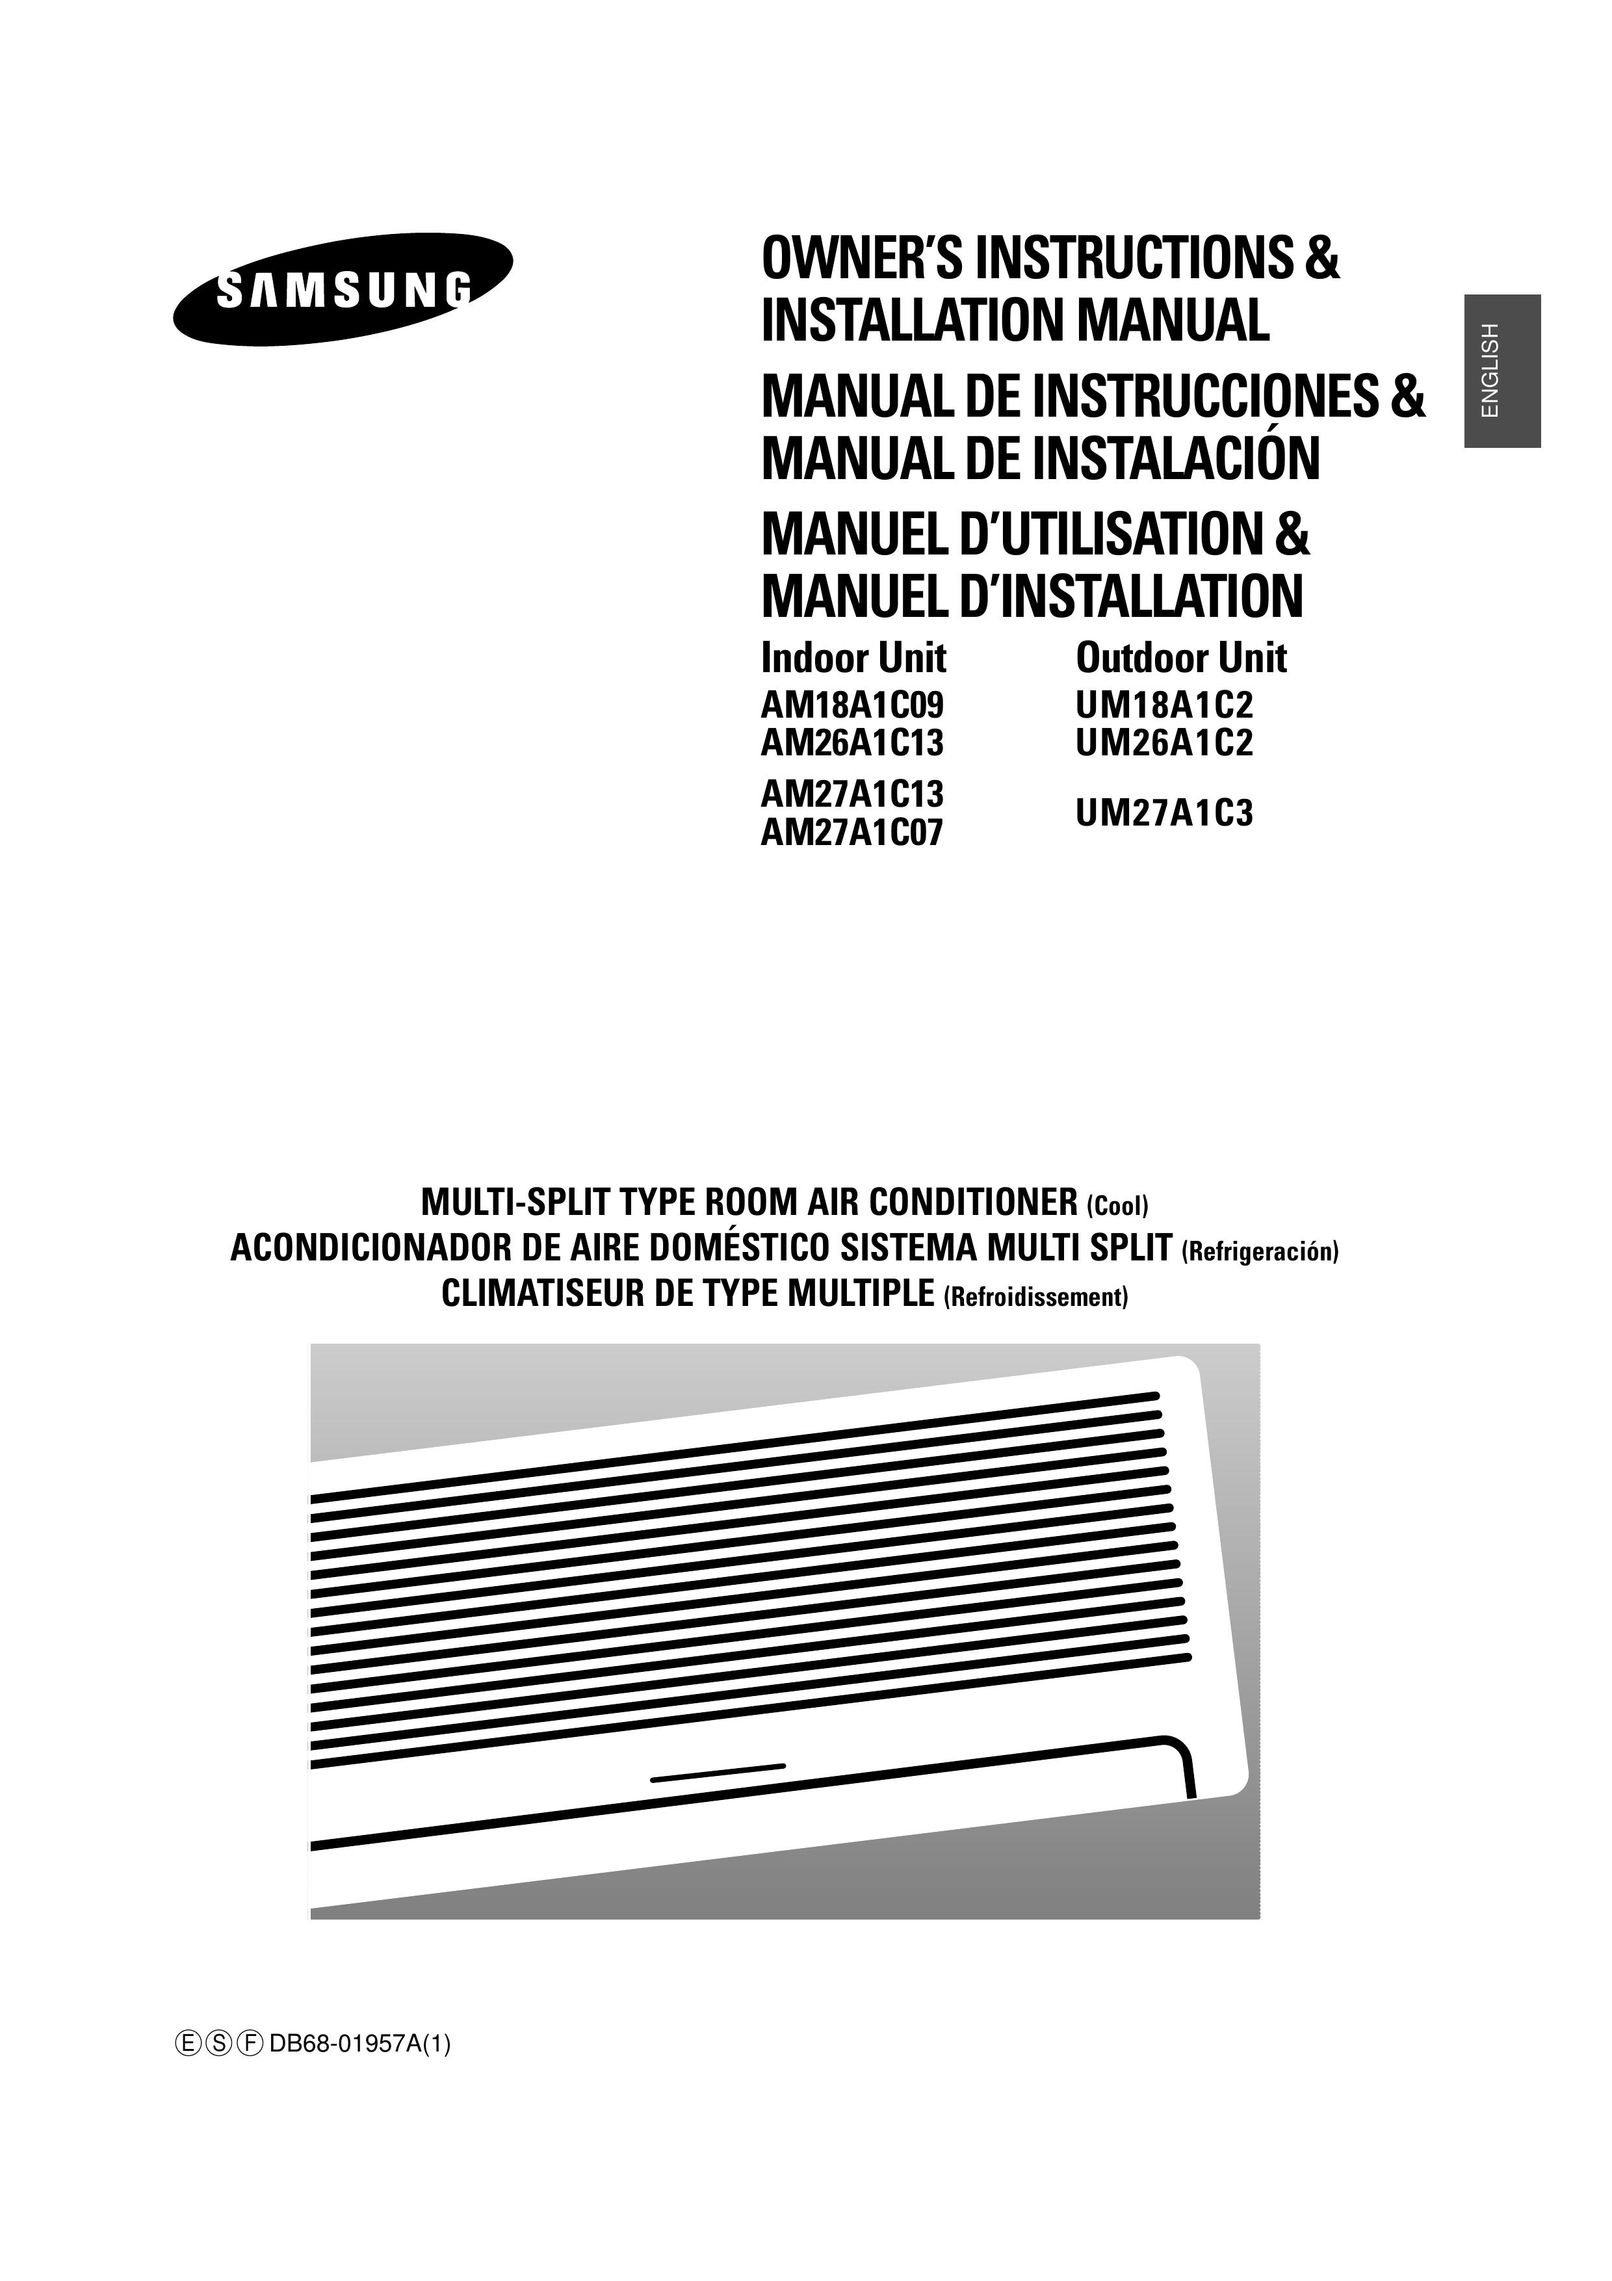 Samsung AM26A1C13 Air Conditioner User Manual